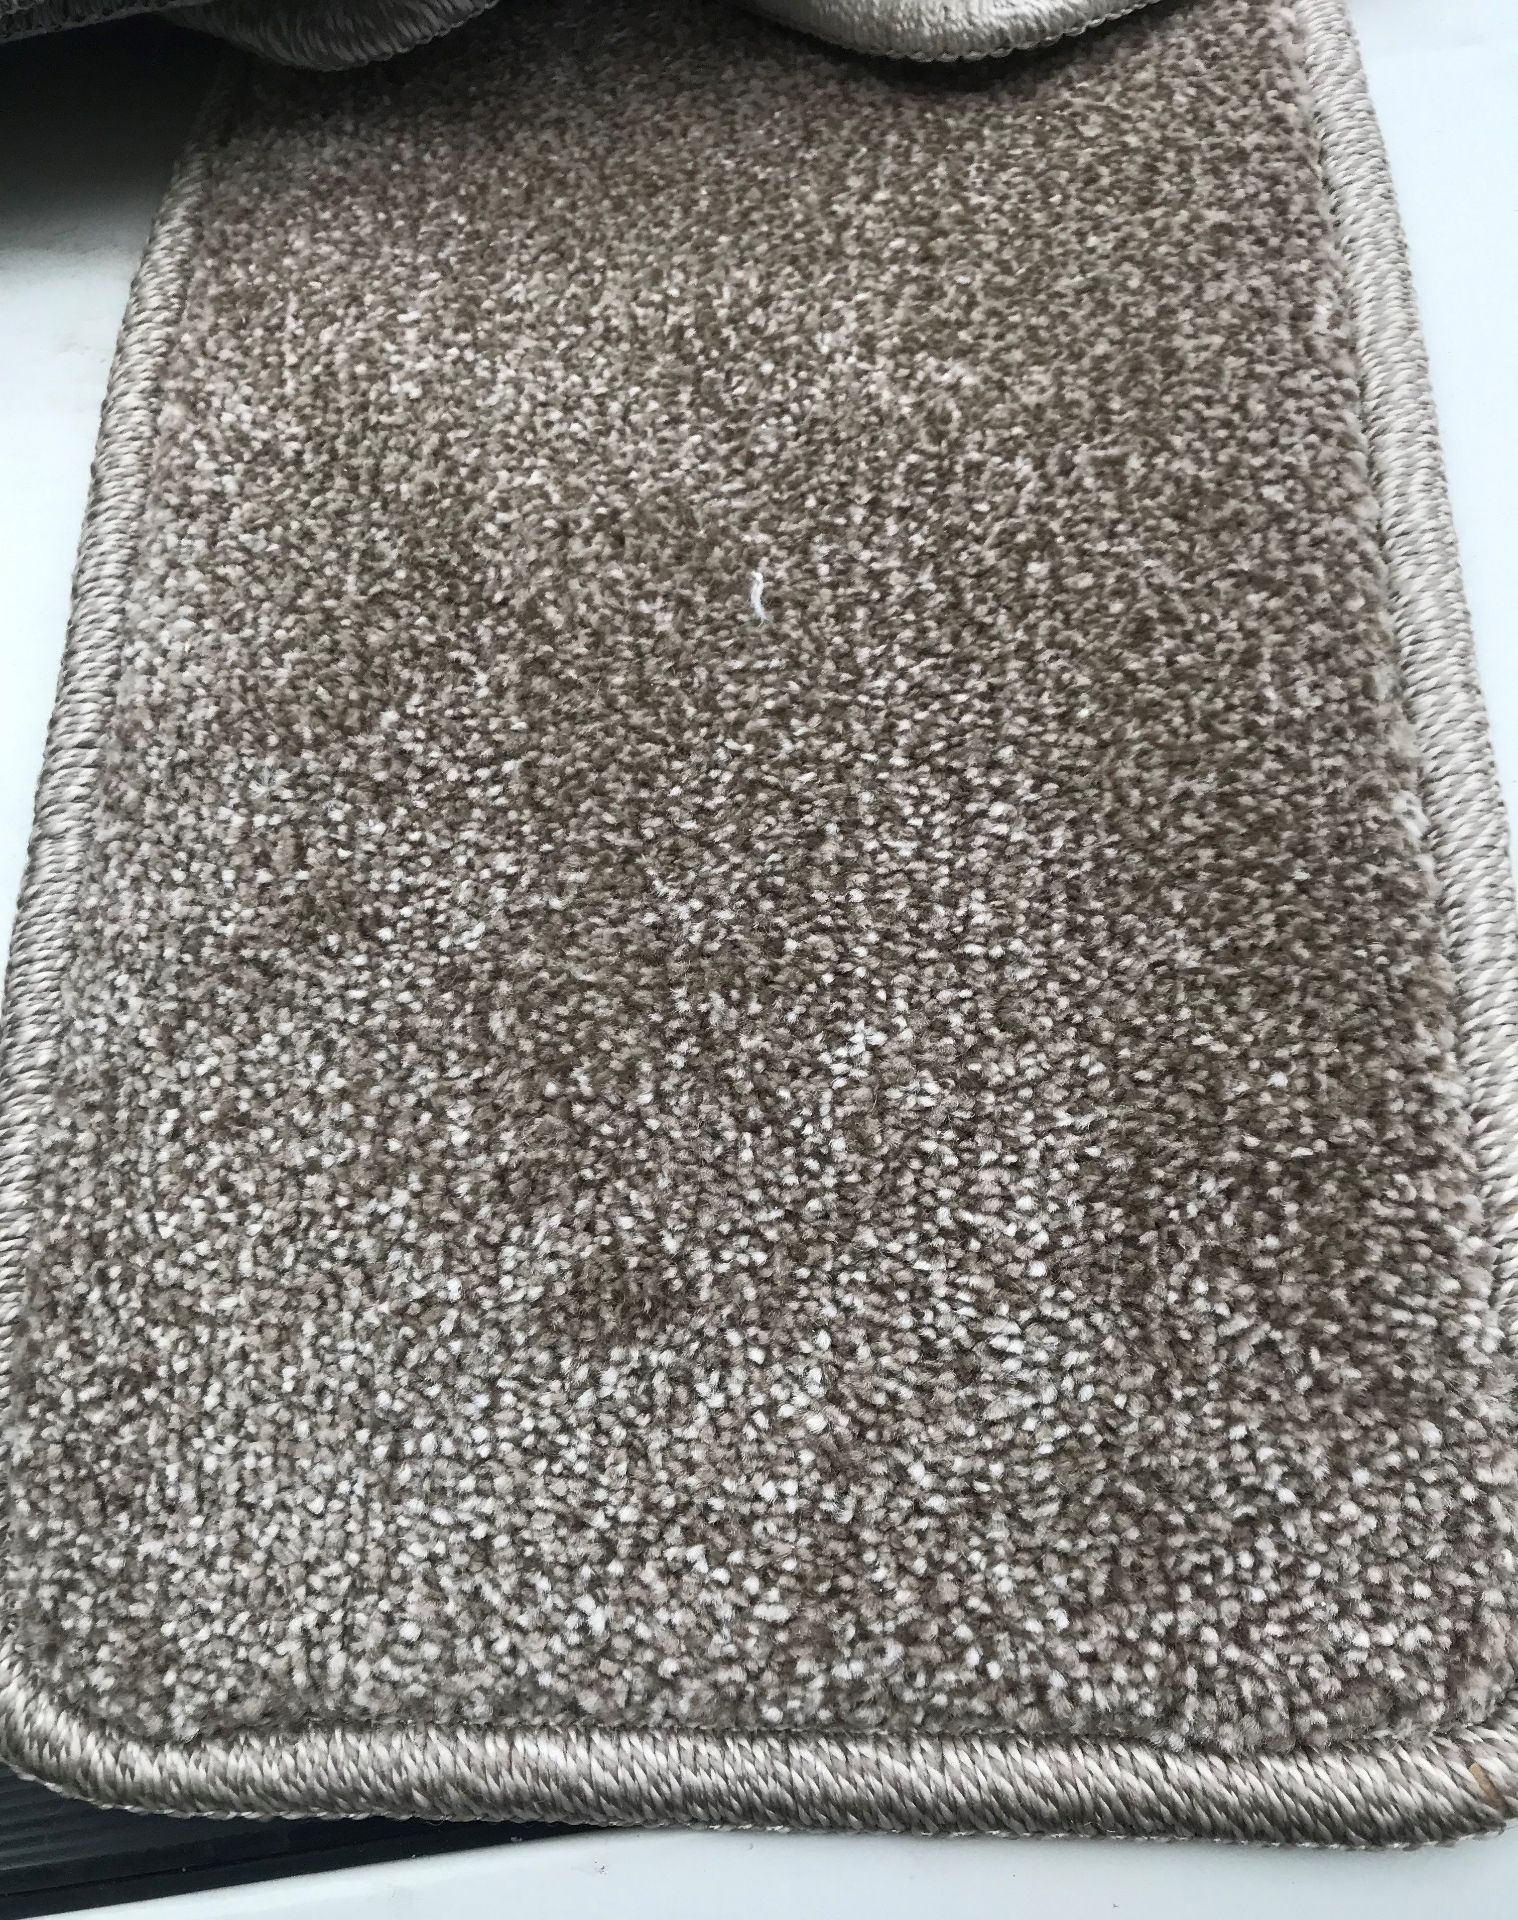 1 x Luxury Quality 50Oz Twist Pile Carpet - Colour Malted Barley - - 26X4 Meter Roll - Rrp £36.99